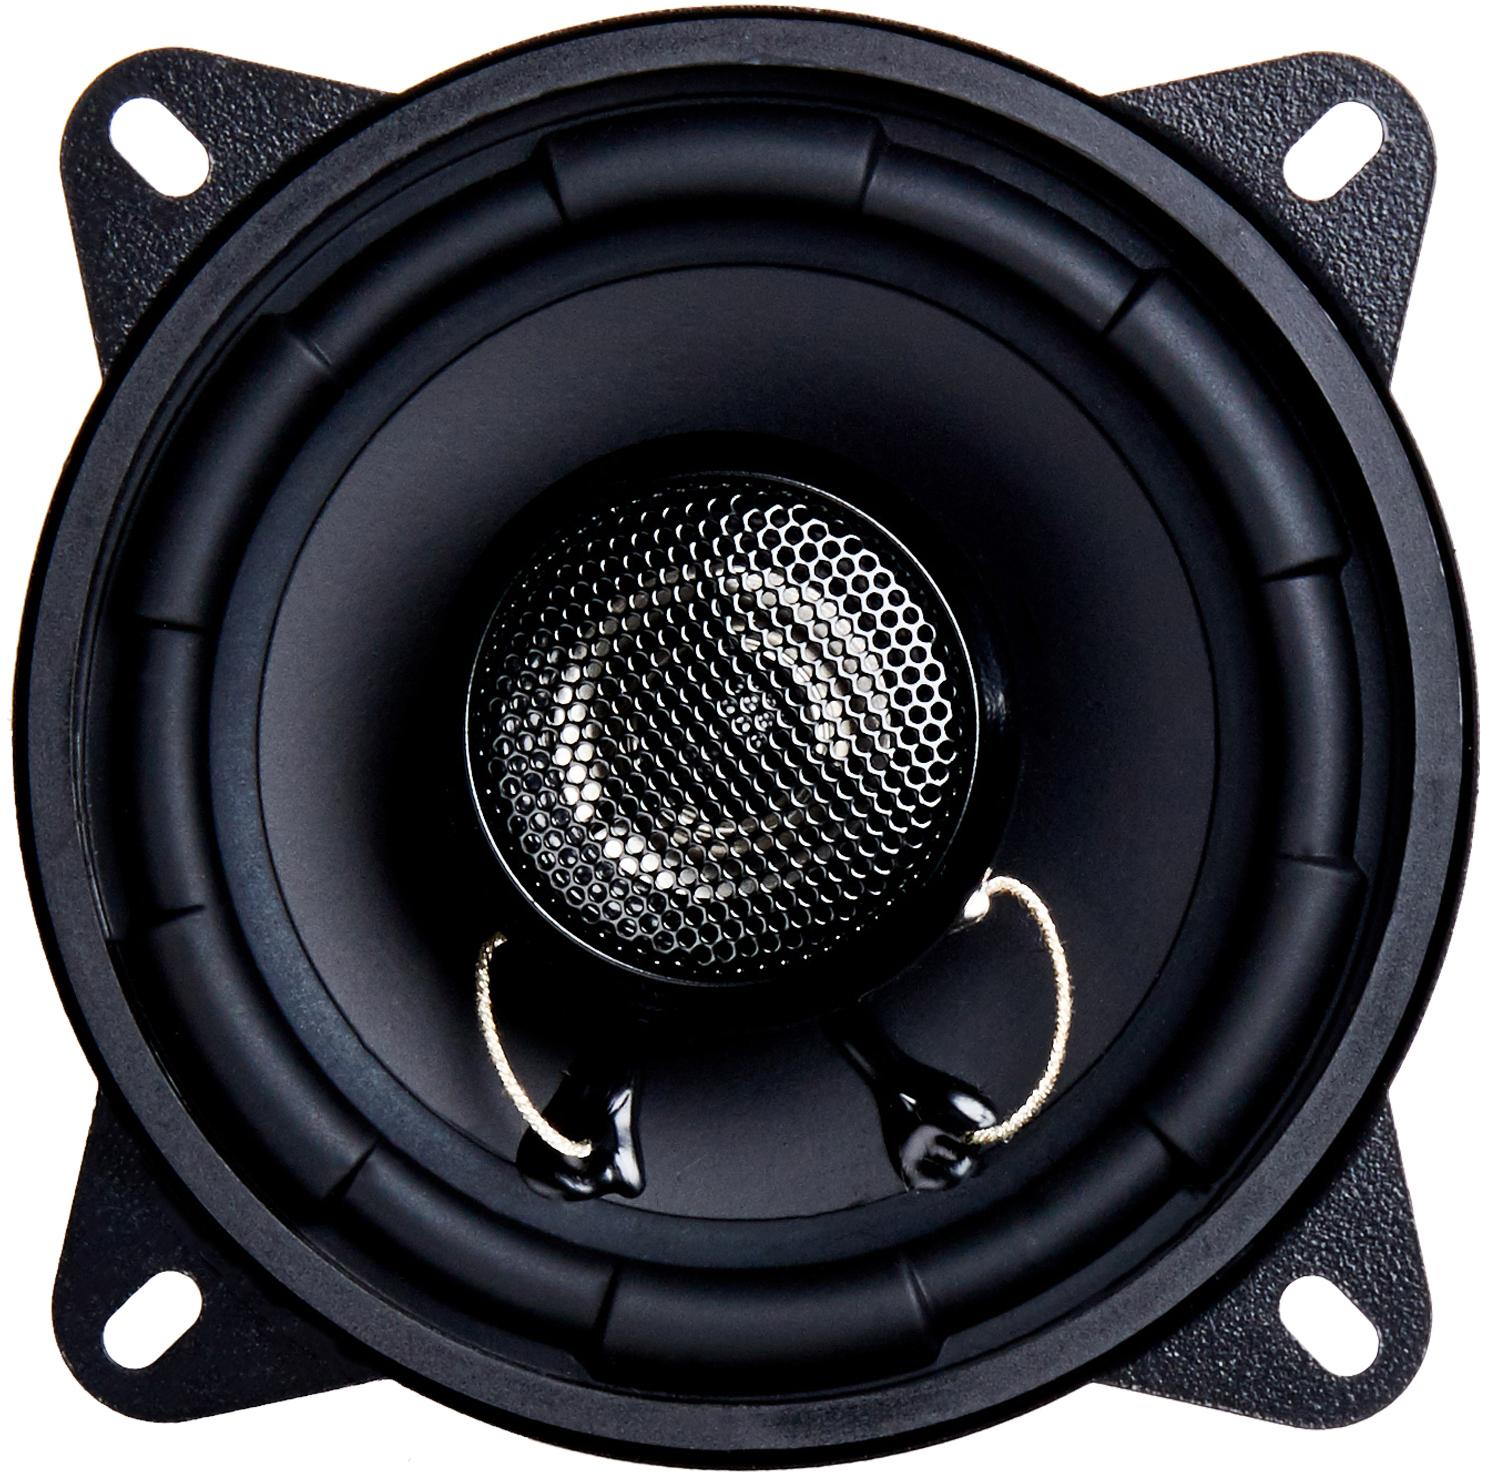 In Phase Sxt1035 200W Coaxial Speakers